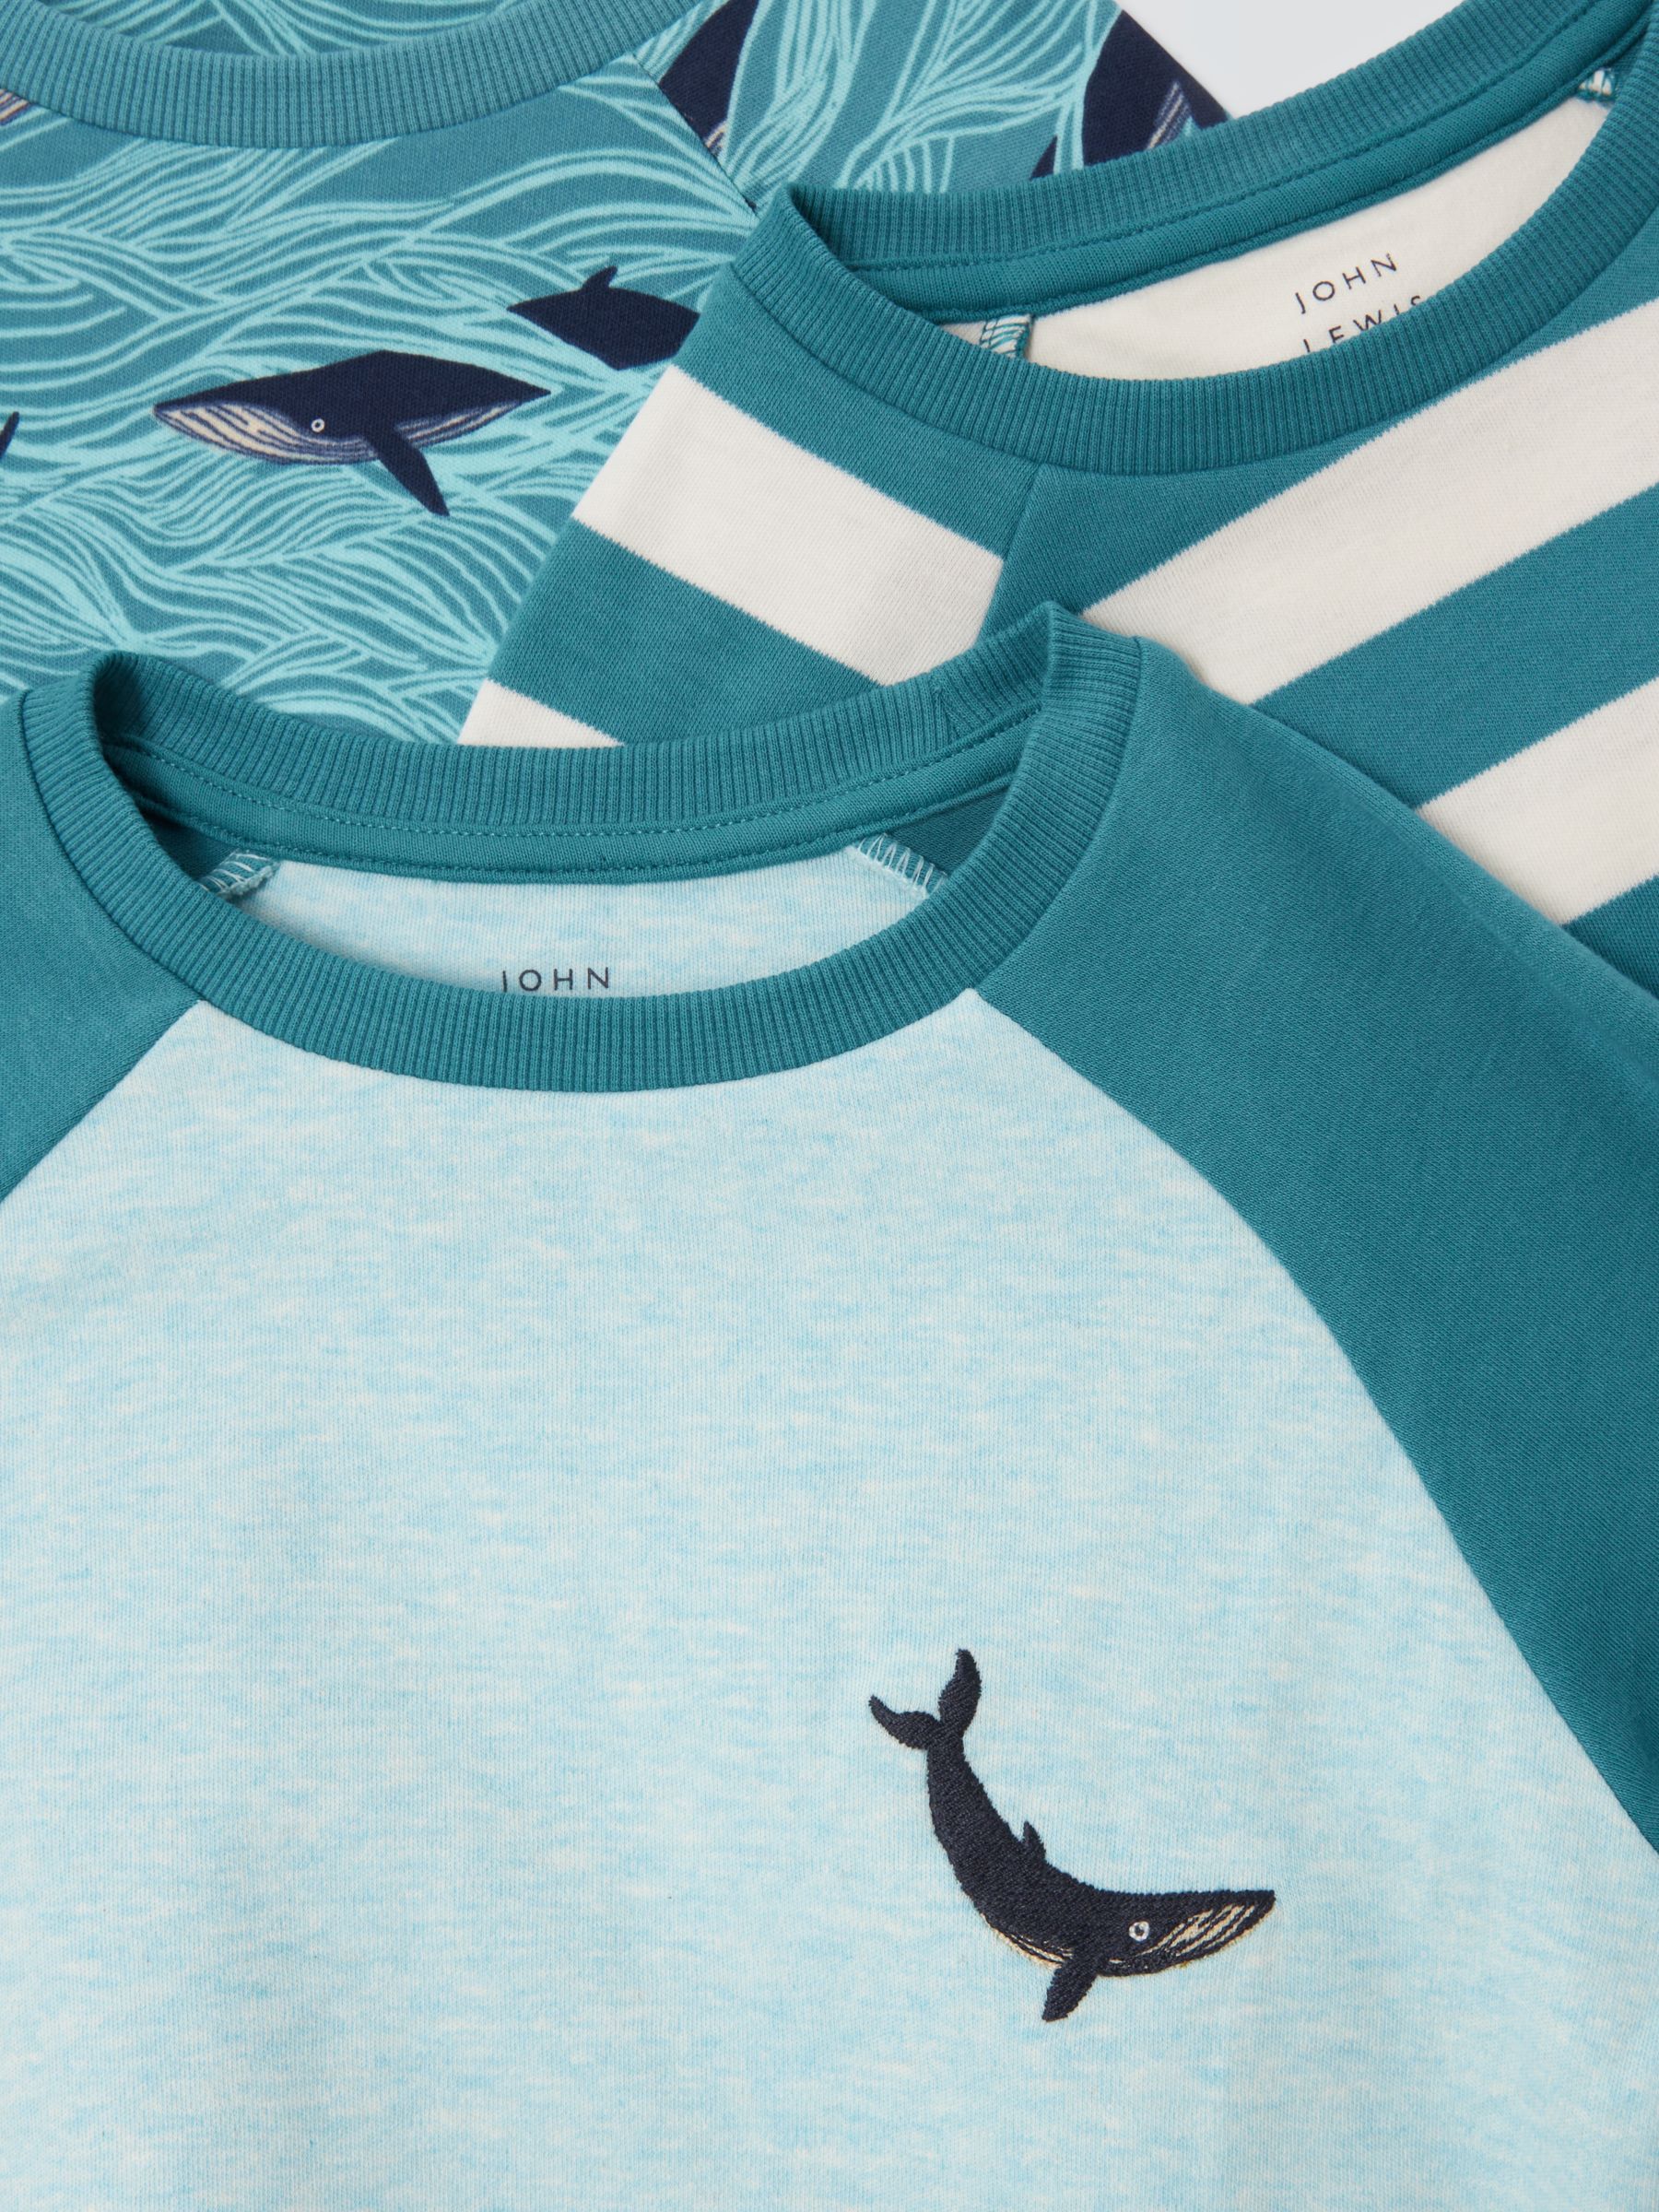 Buy John Lewis Kids' Stripe Whale Print Pyjamas, Pack of 3, Green Online at johnlewis.com